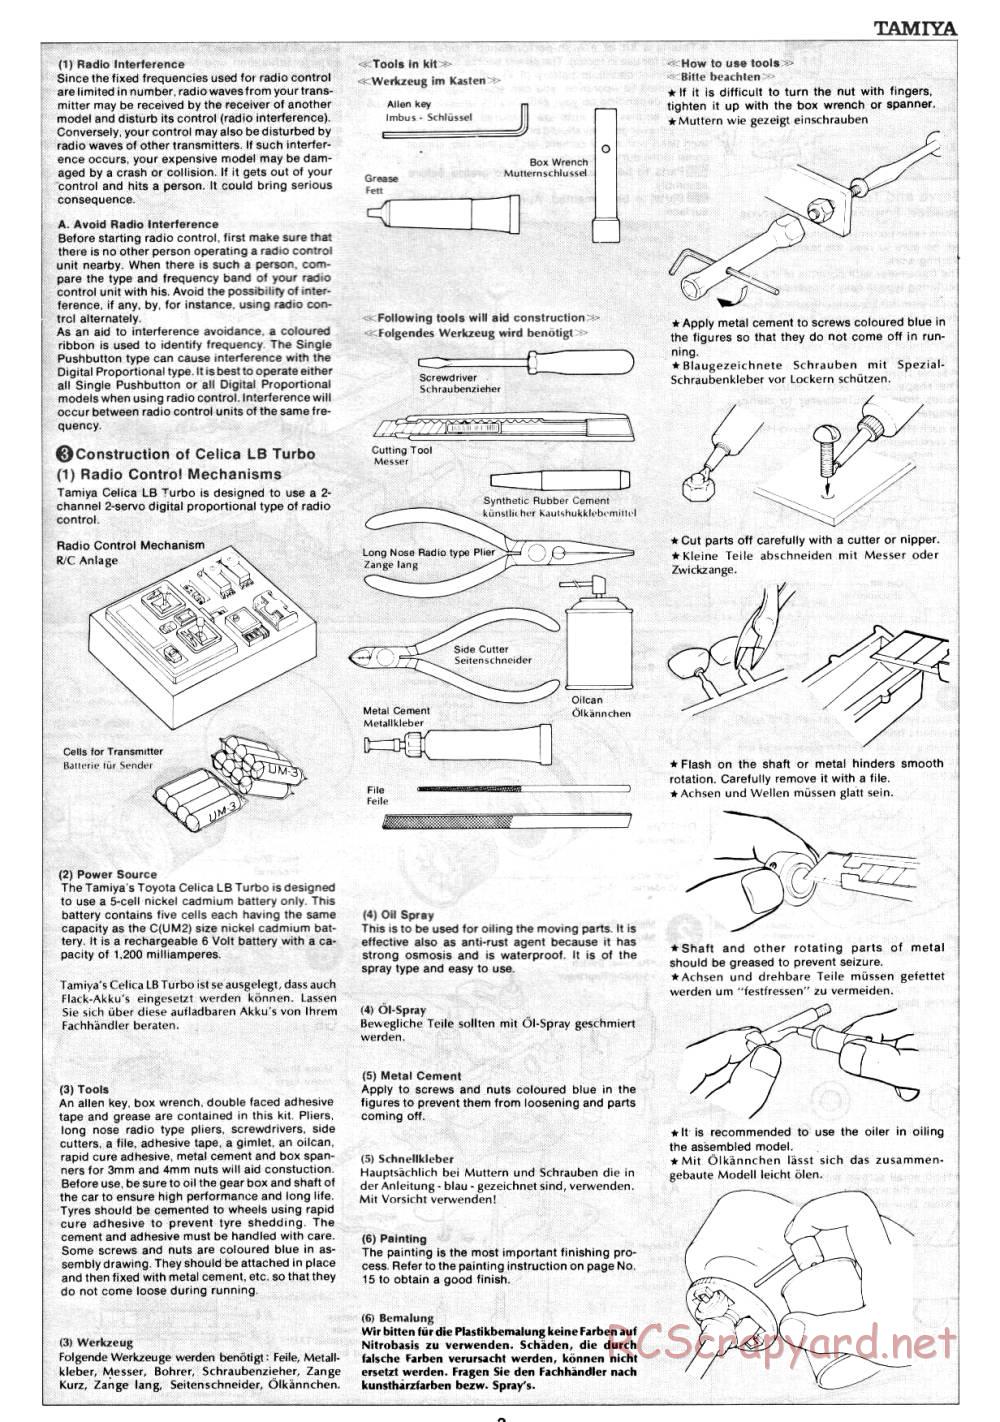 Tamiya - Toyota Celica LB Turbo Gr.5 (CS) - 58009 - Manual - Page 3